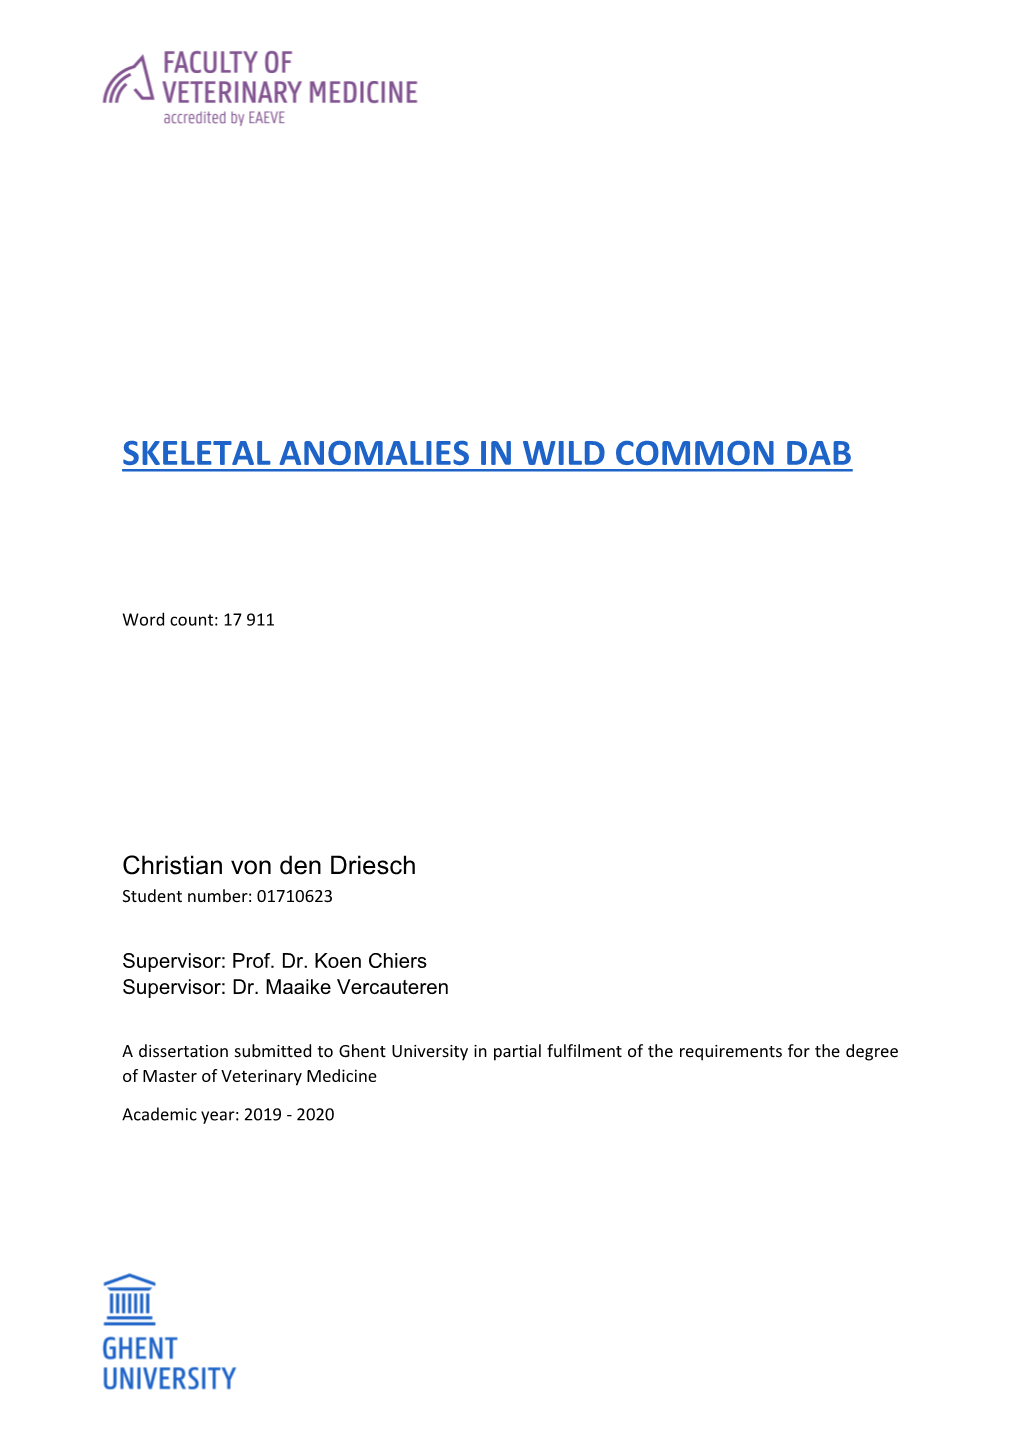 Skeletal Anomalies in Wild Common Dab